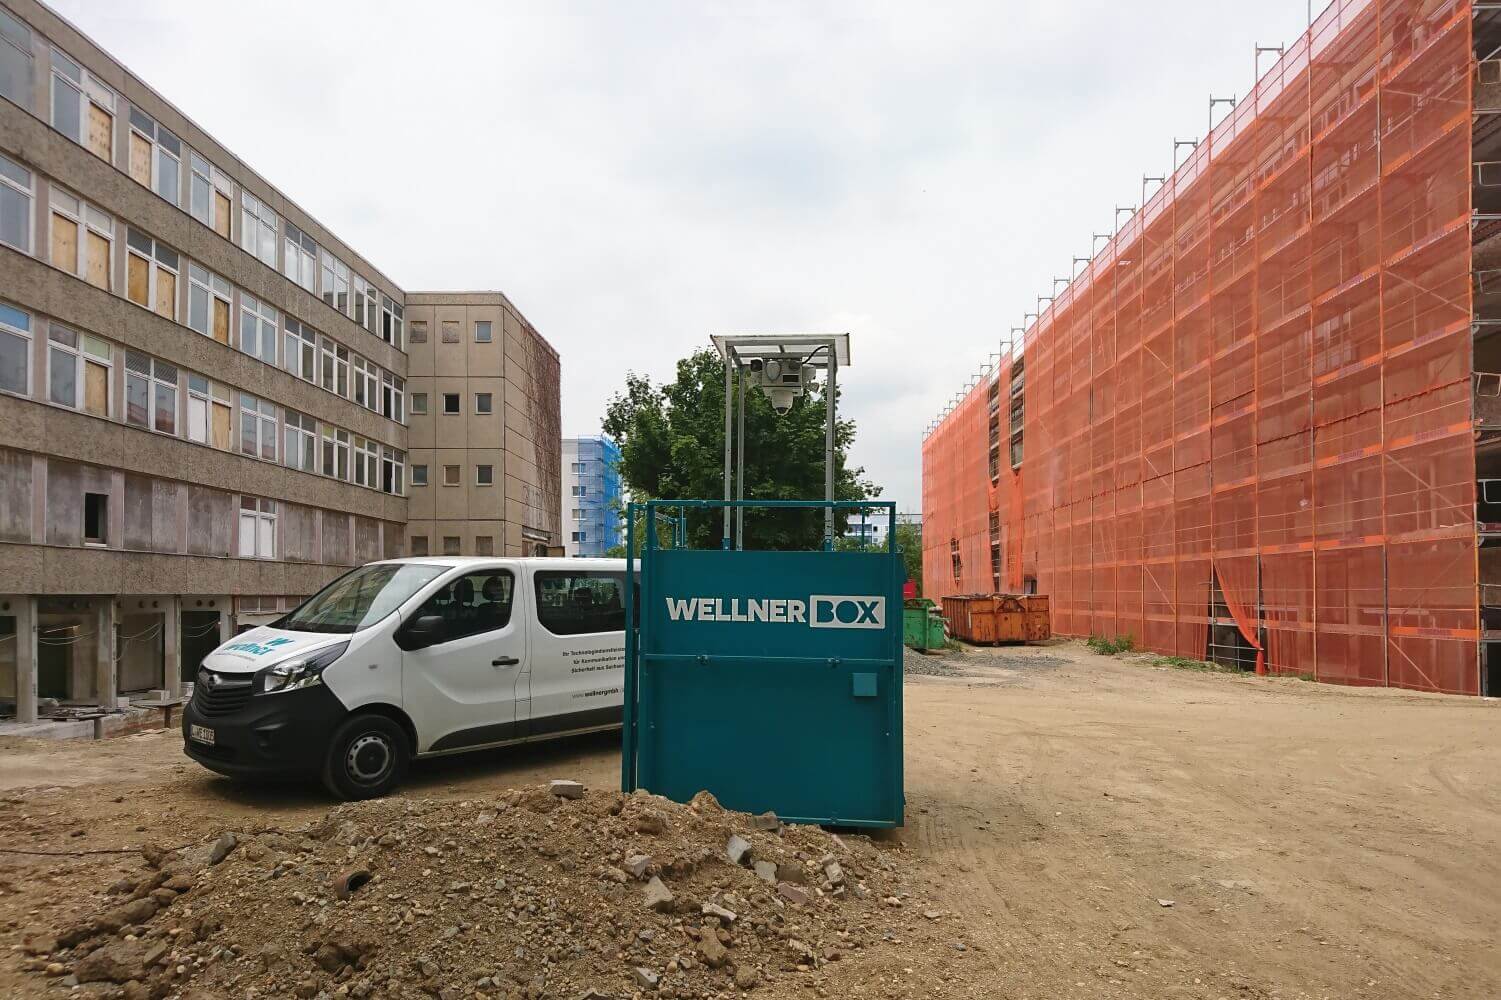 WellnerBOX on the future schoolyard of the new Leipzig school complex.